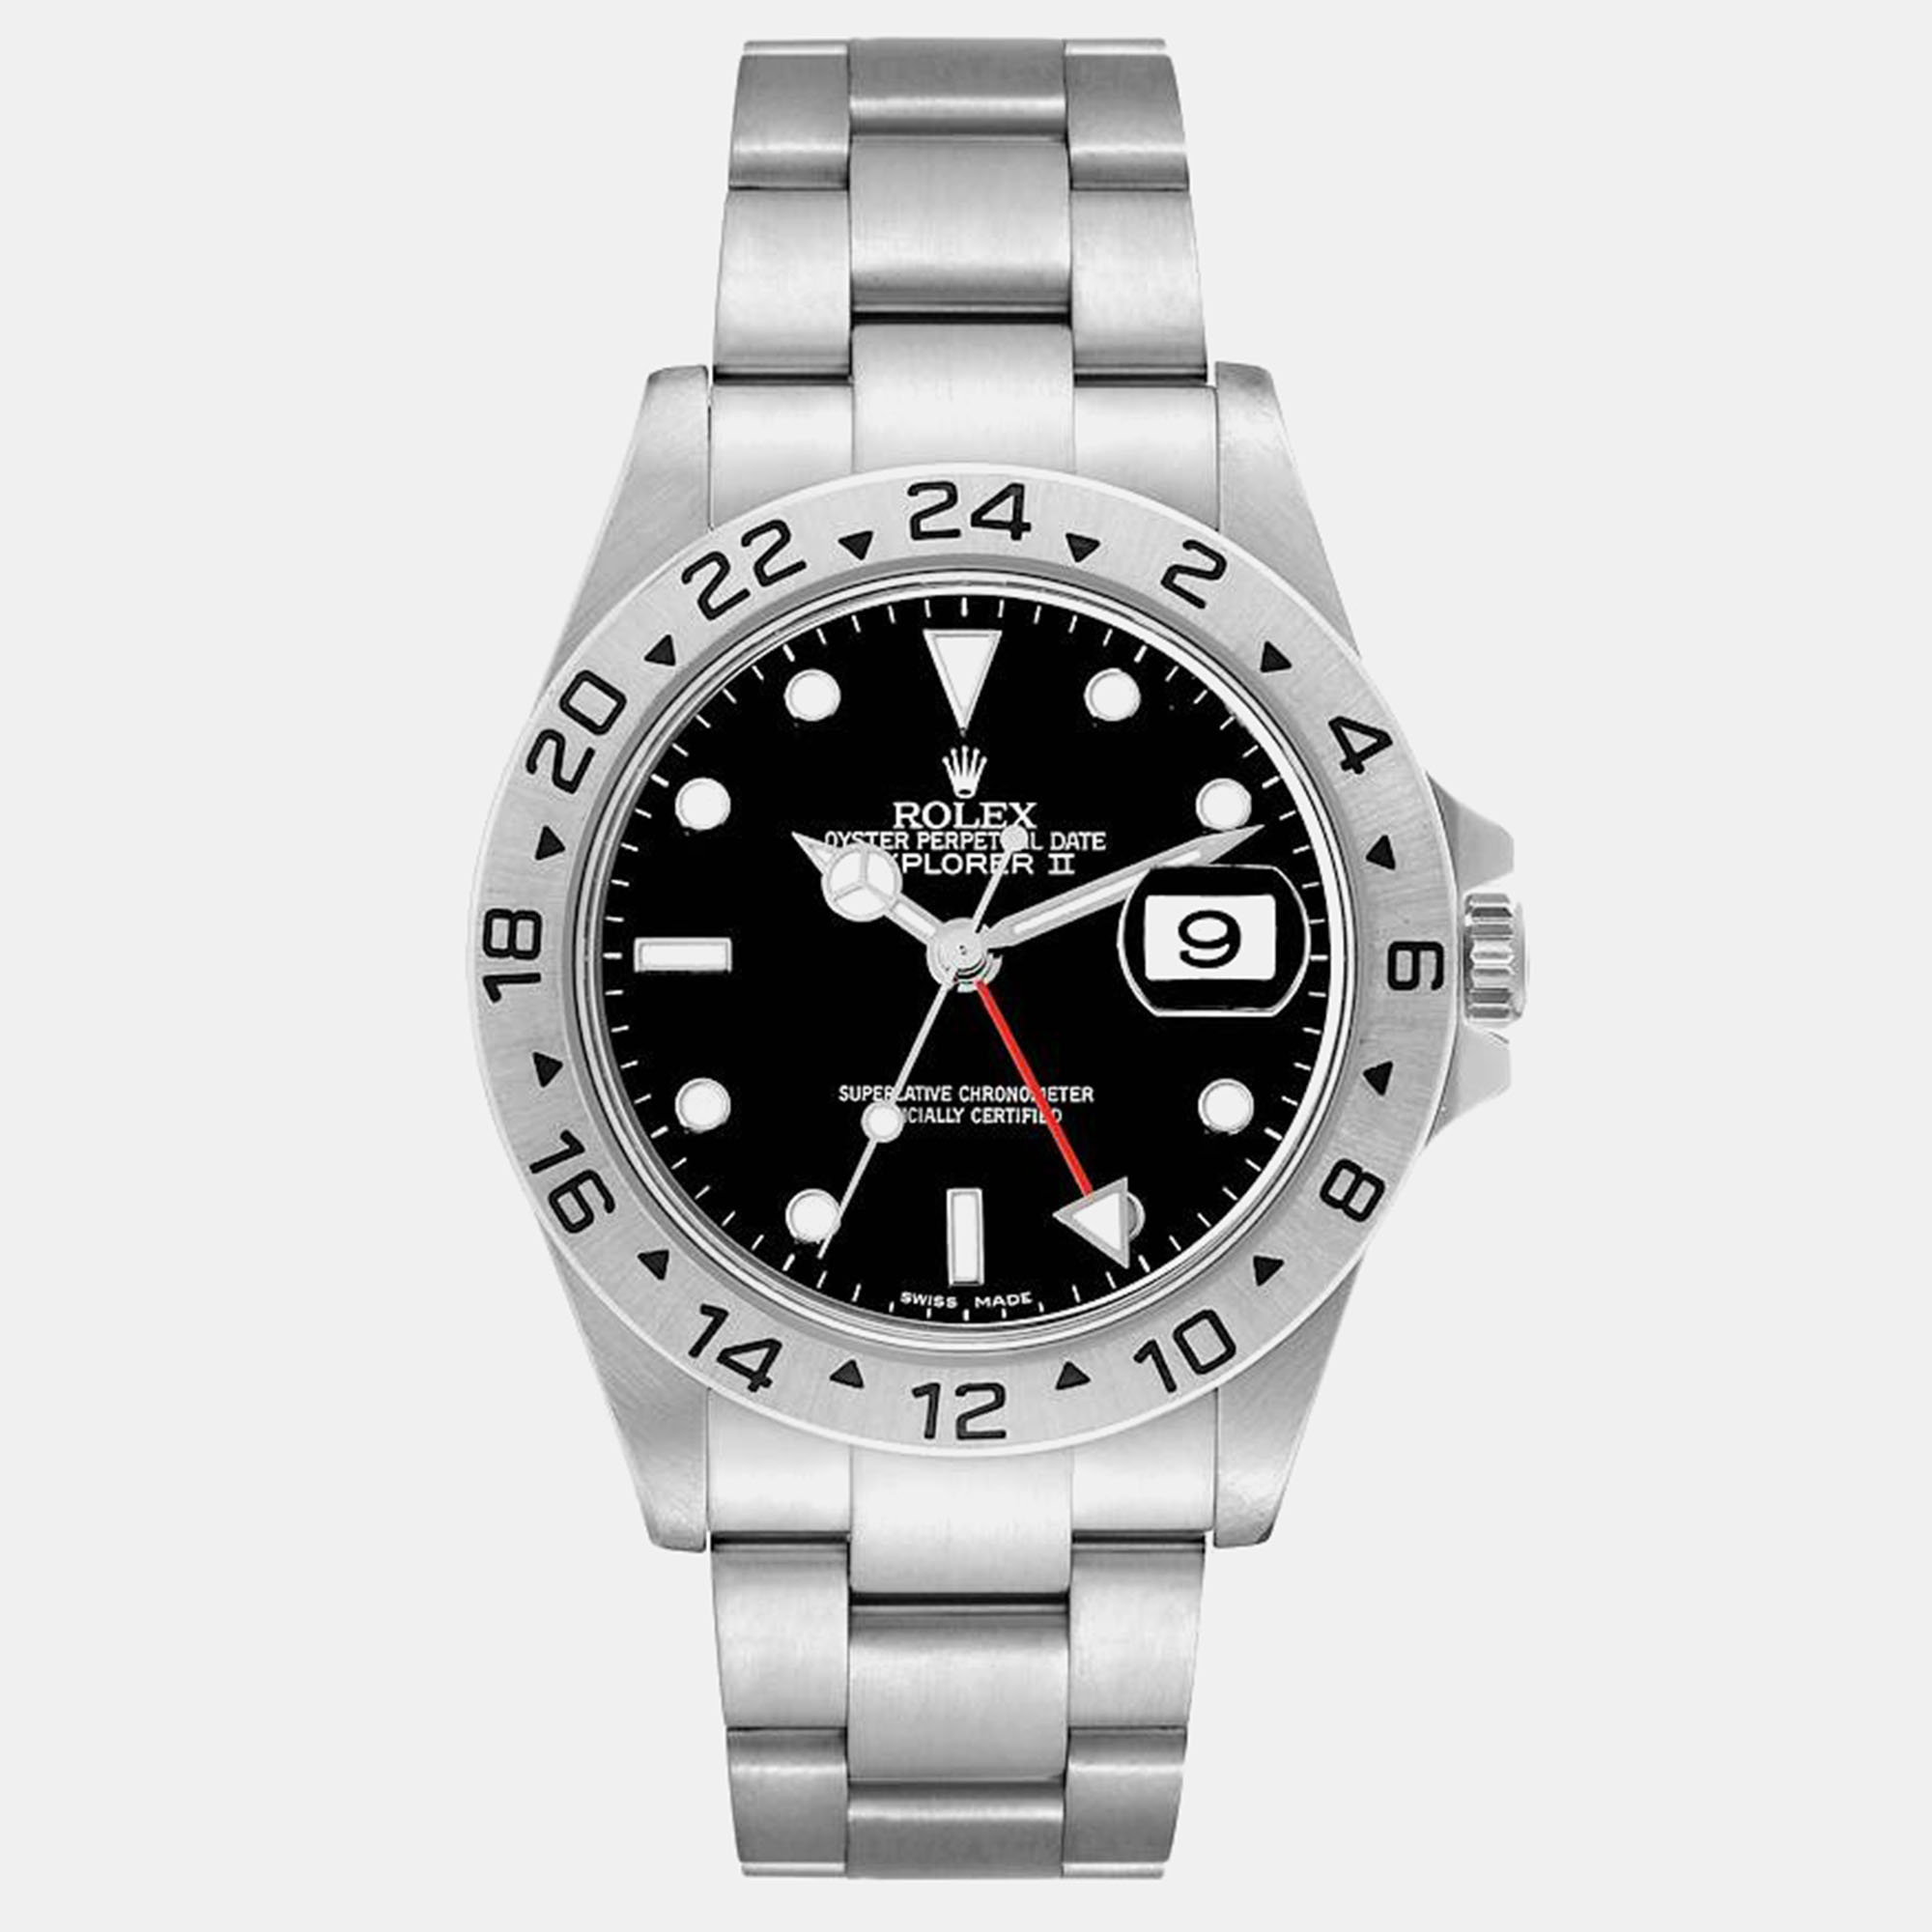 Rolex explorer ii parachrom hairspring steel men's watch 16570 40 mm